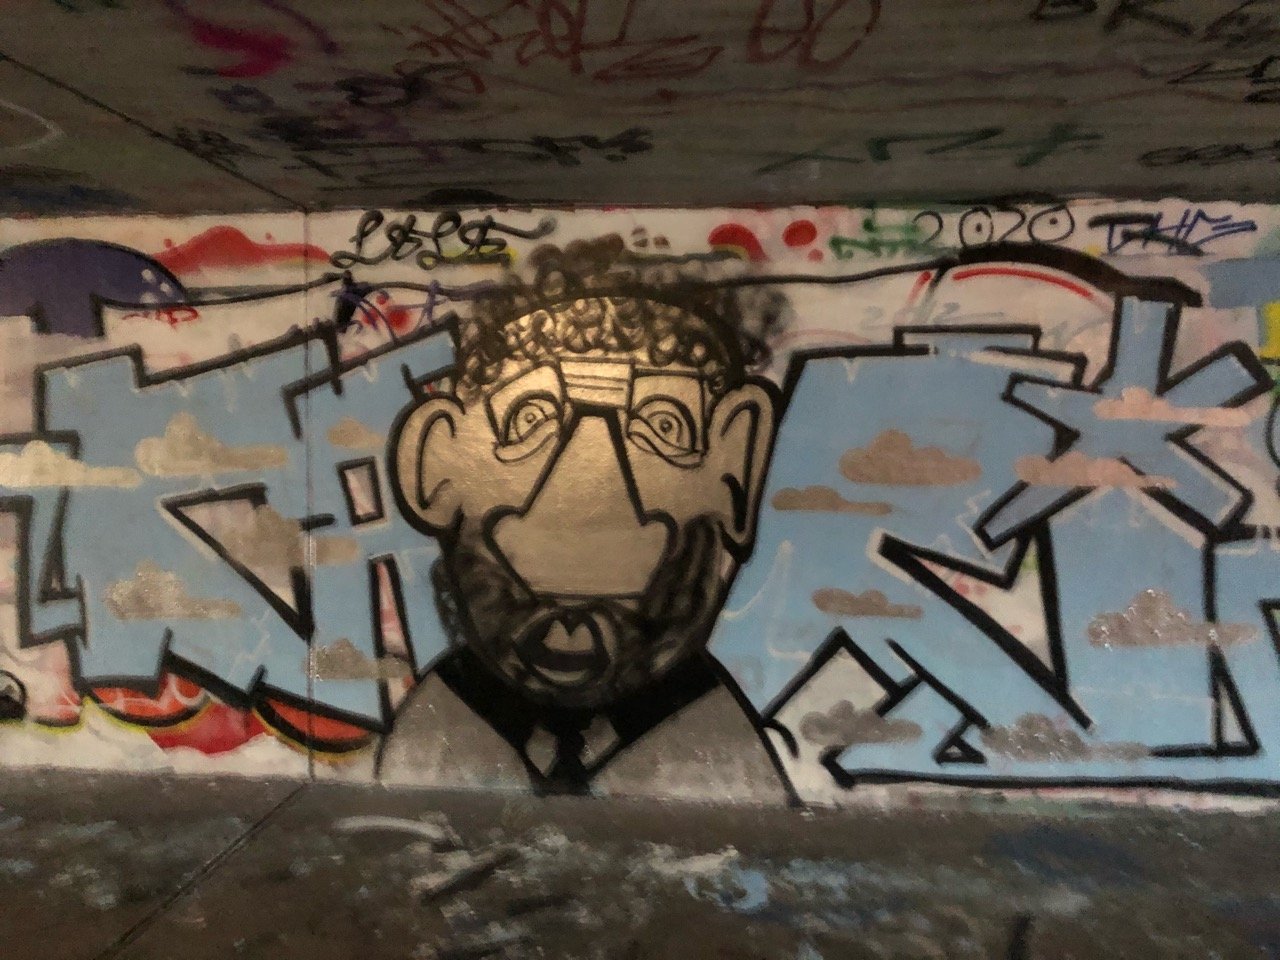 Graffiti in ArtSpots App spotted by Tricky on 10.01.2021